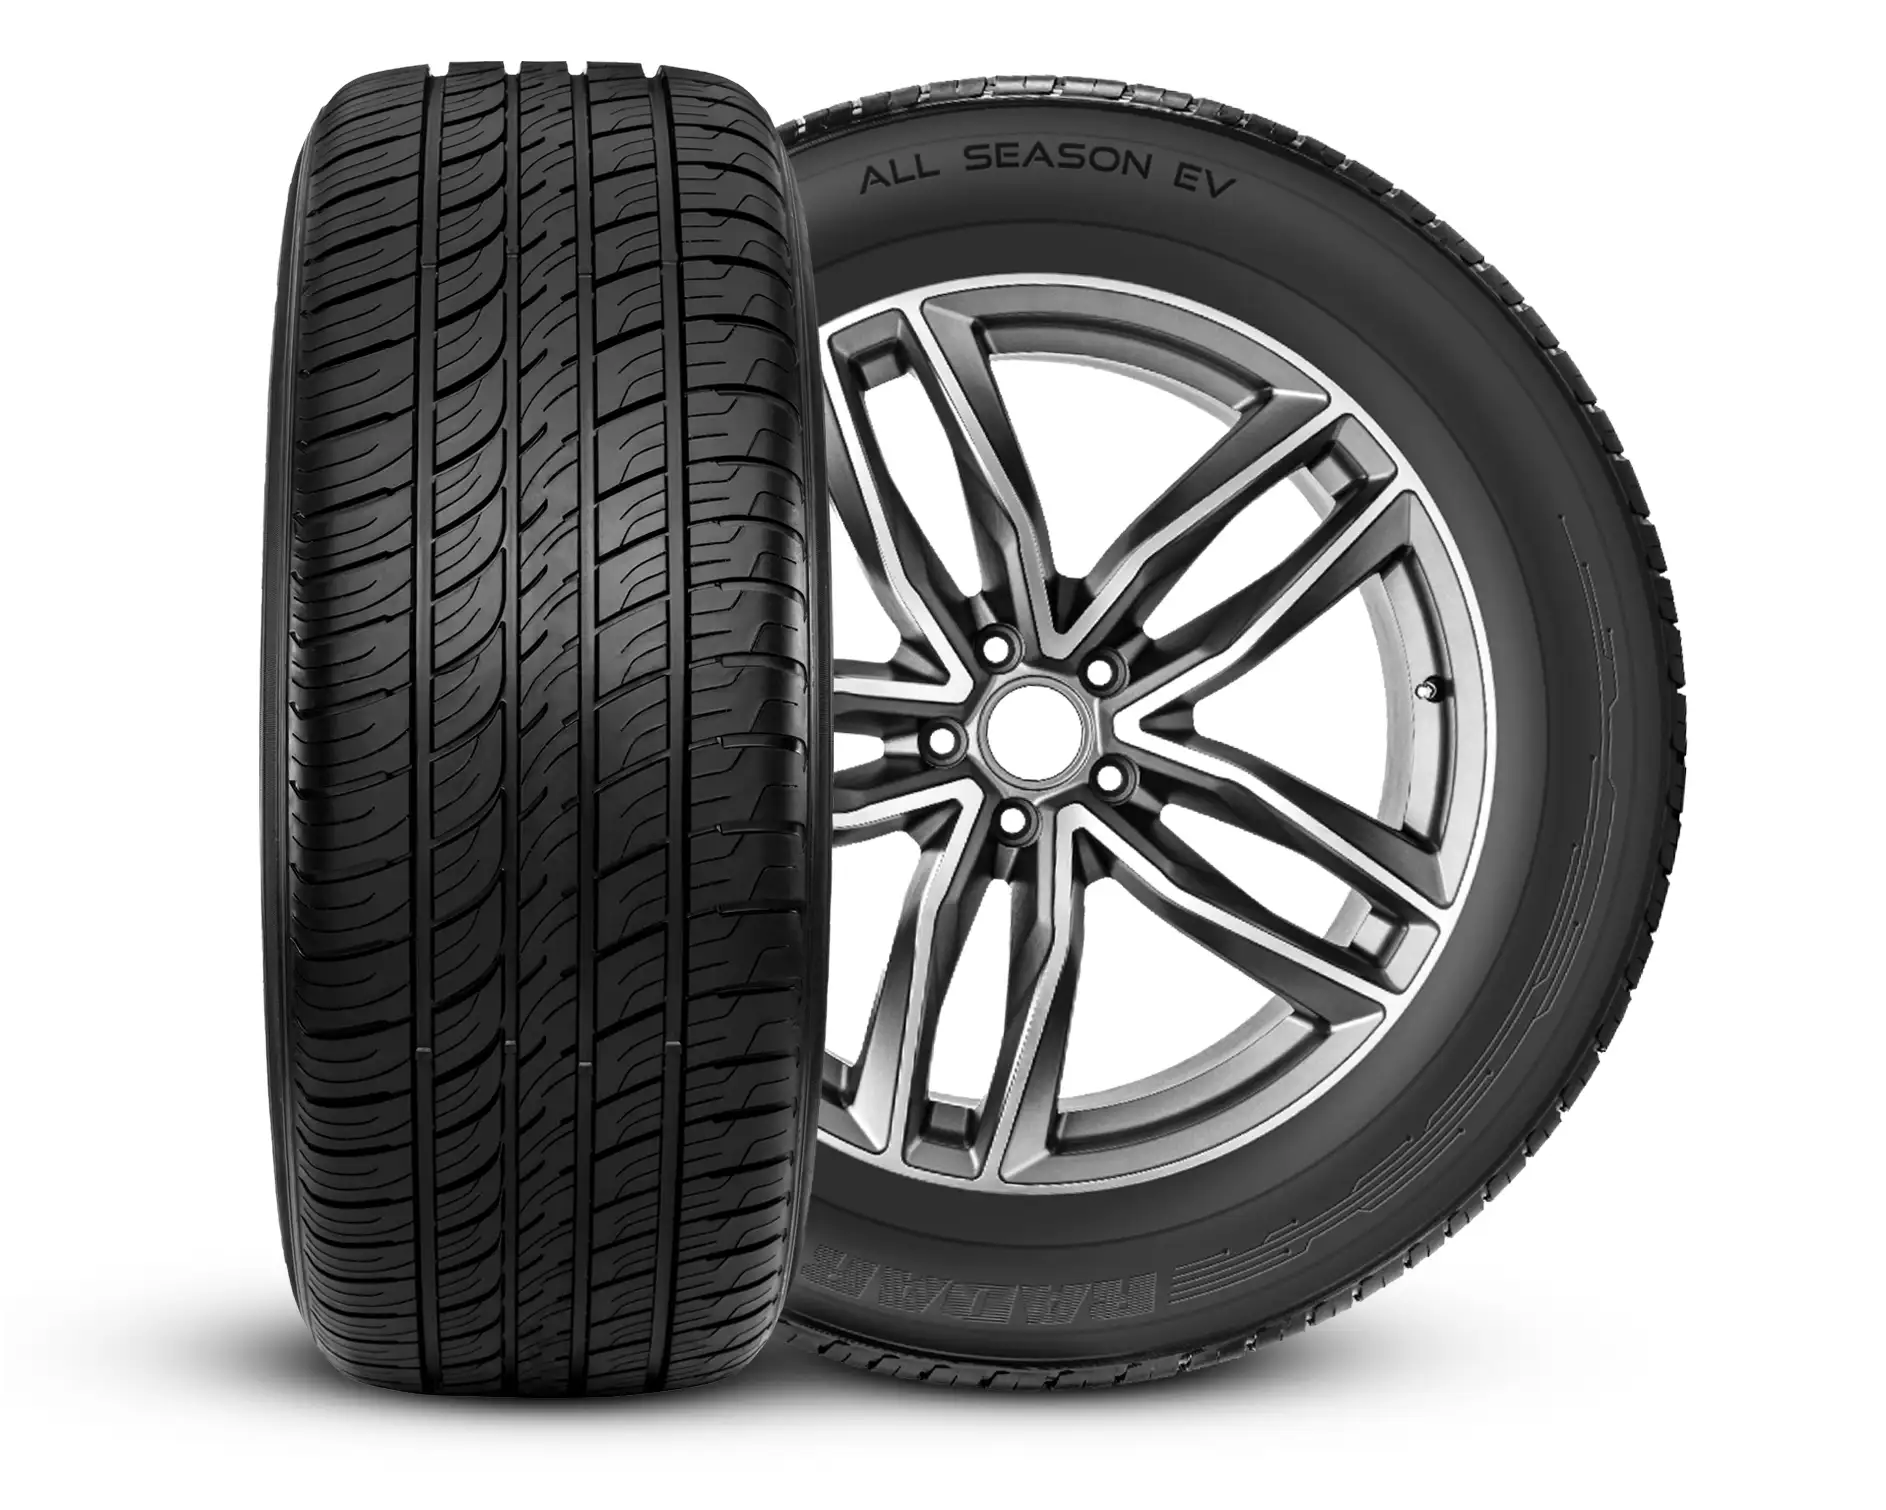 EV Tyre Test Results